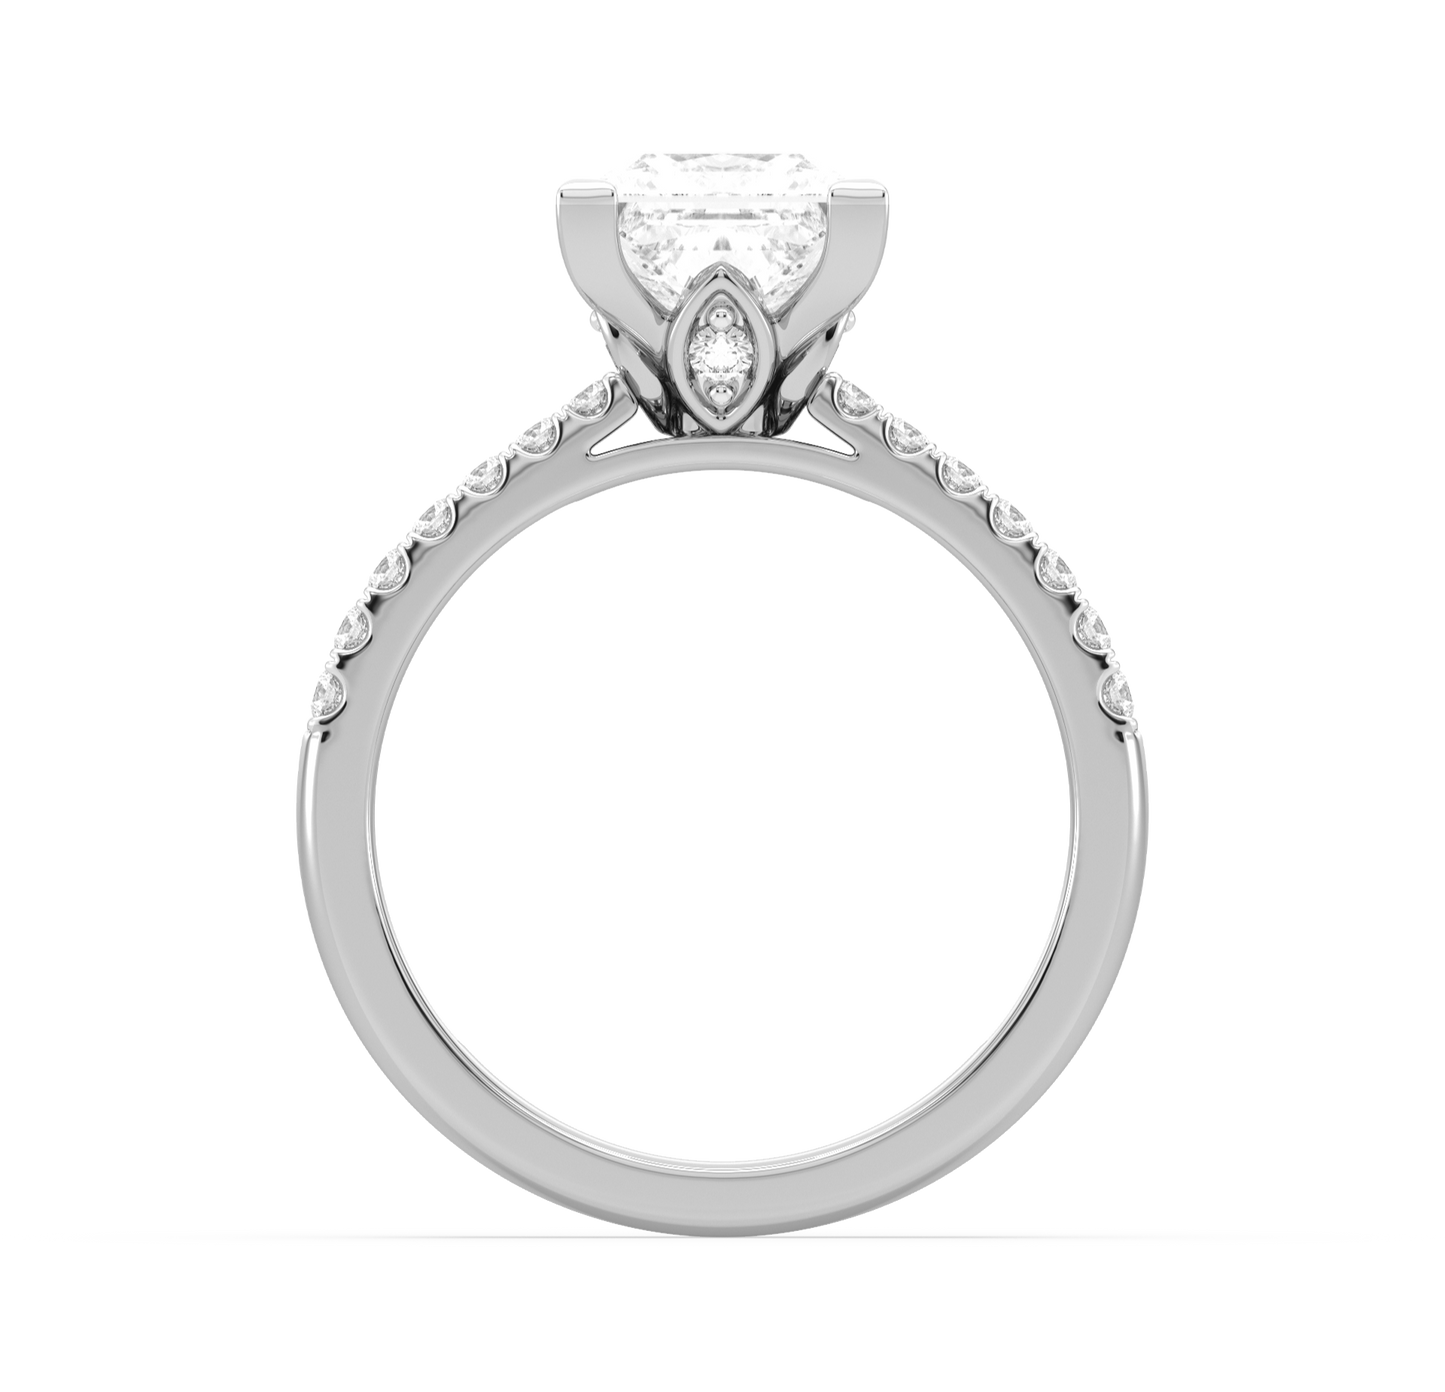 Customised ring RG21012-PH21012